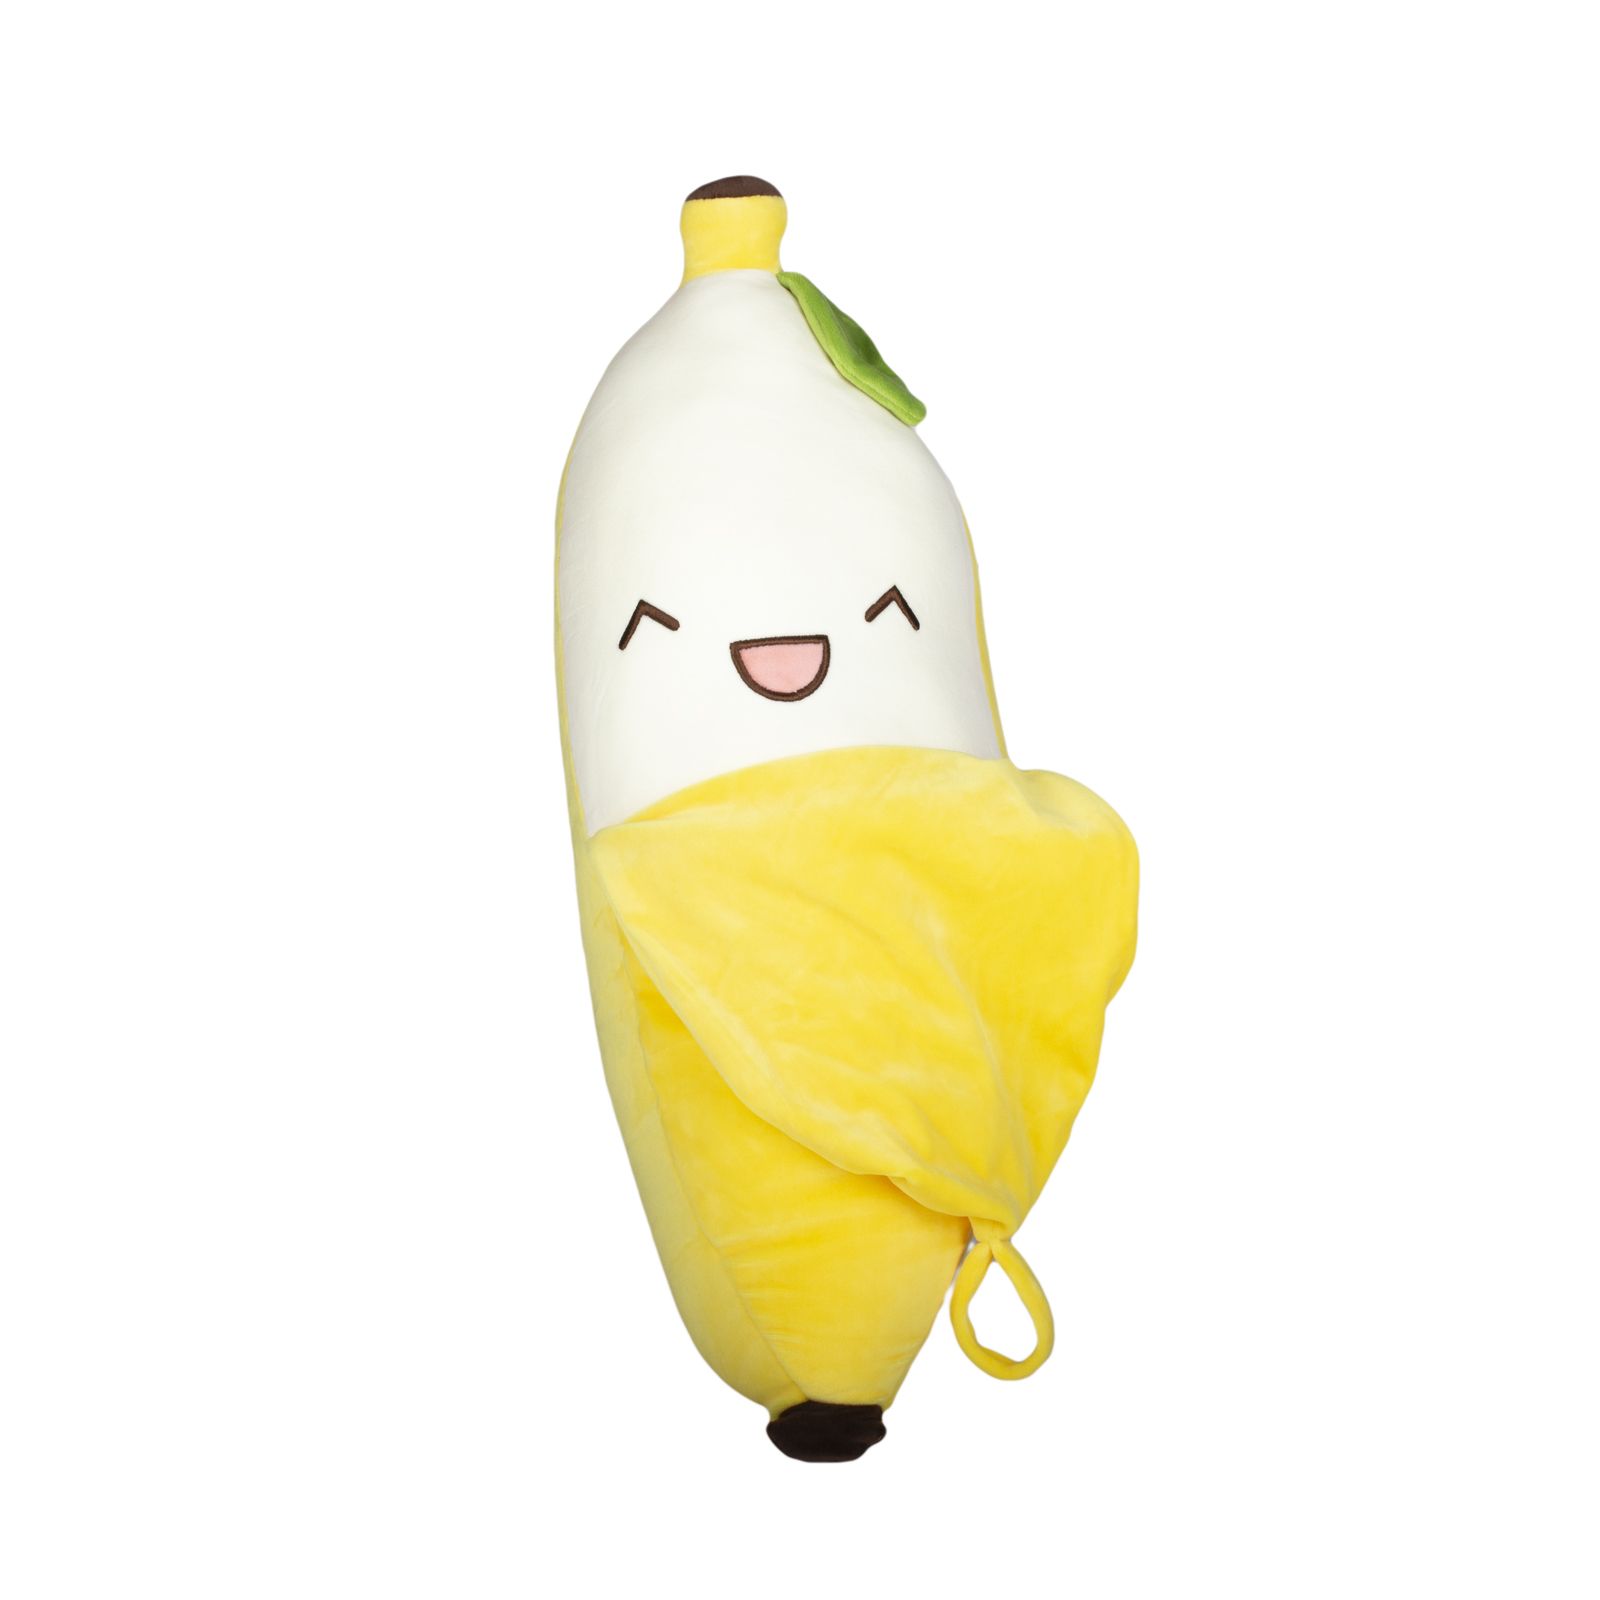 Мягкие игрушки /банан/человек банан/ игрушка антистресс /банан в капюшоне/ banana man/ банано чел